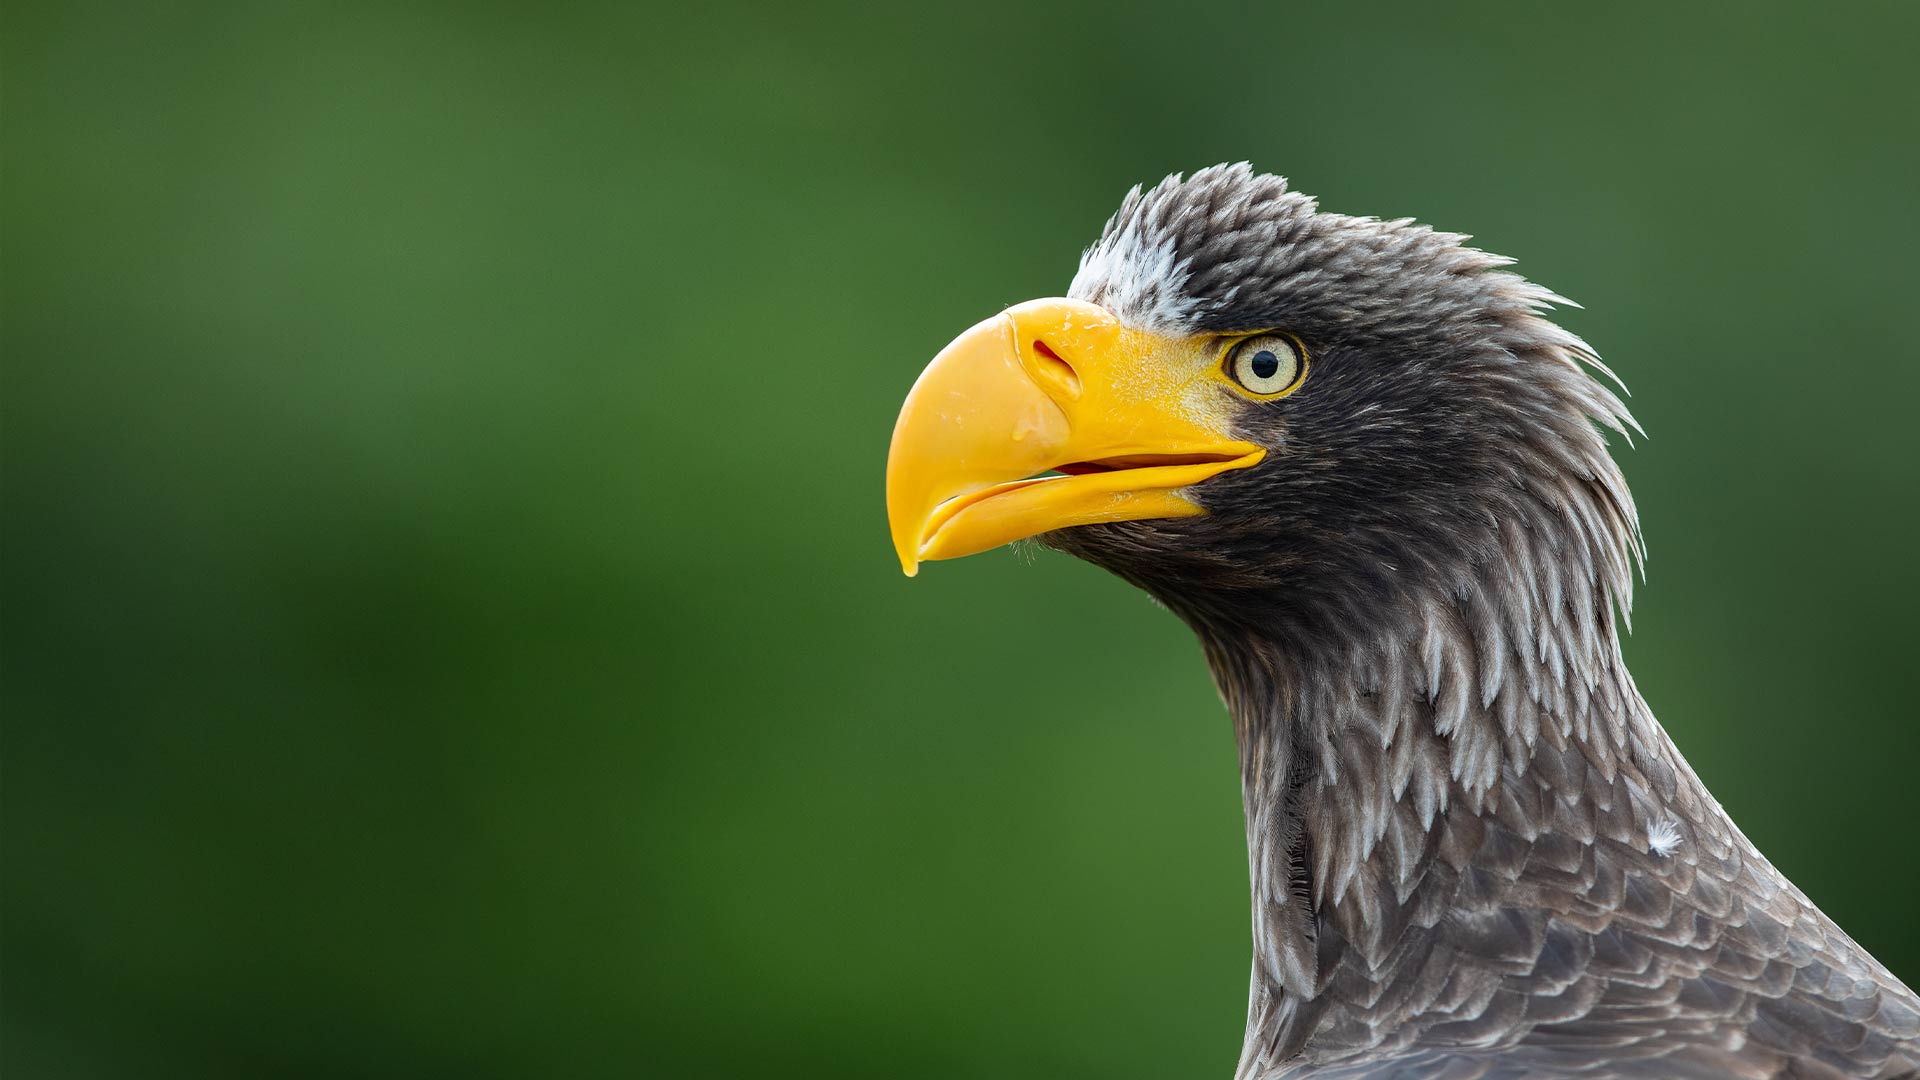 steller eagle with yellow beak